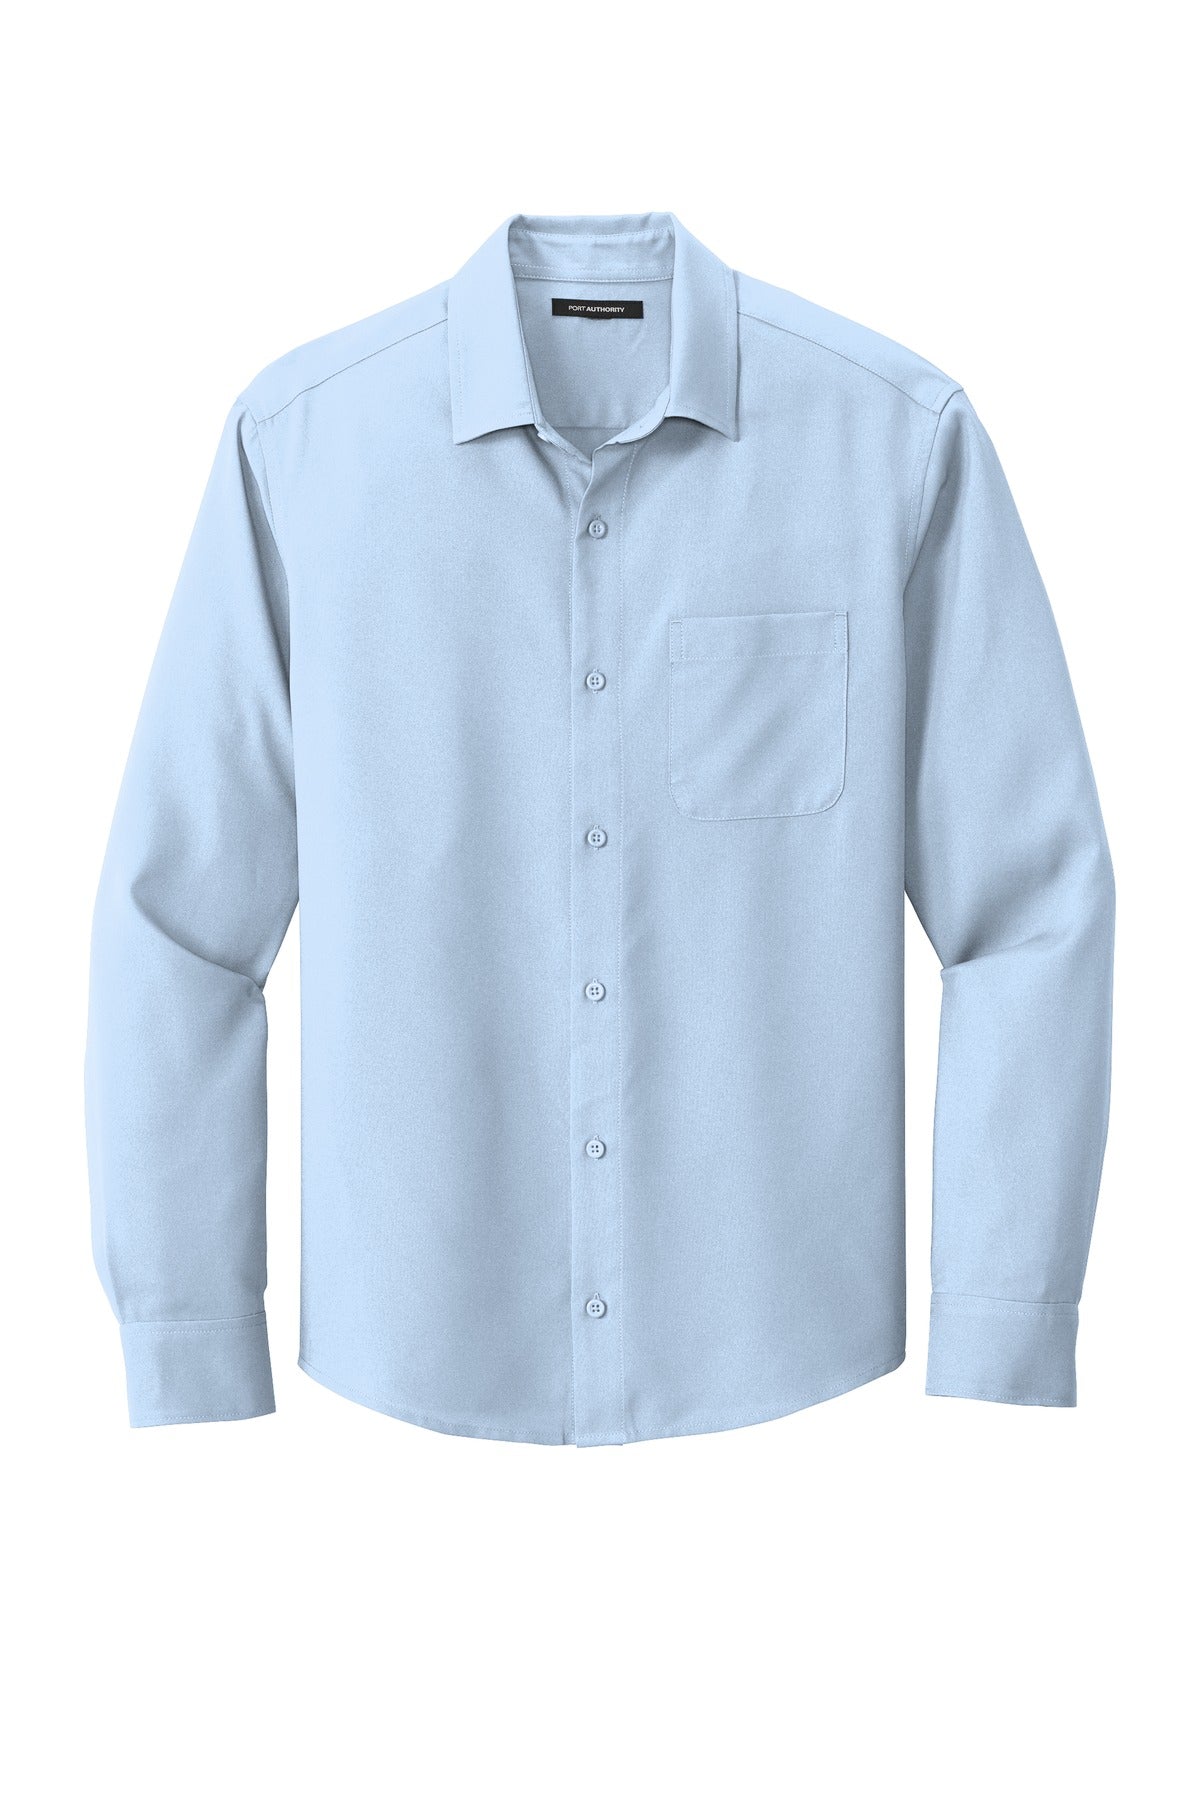 Port Authority ® Long Sleeve Performance Staff Shirt